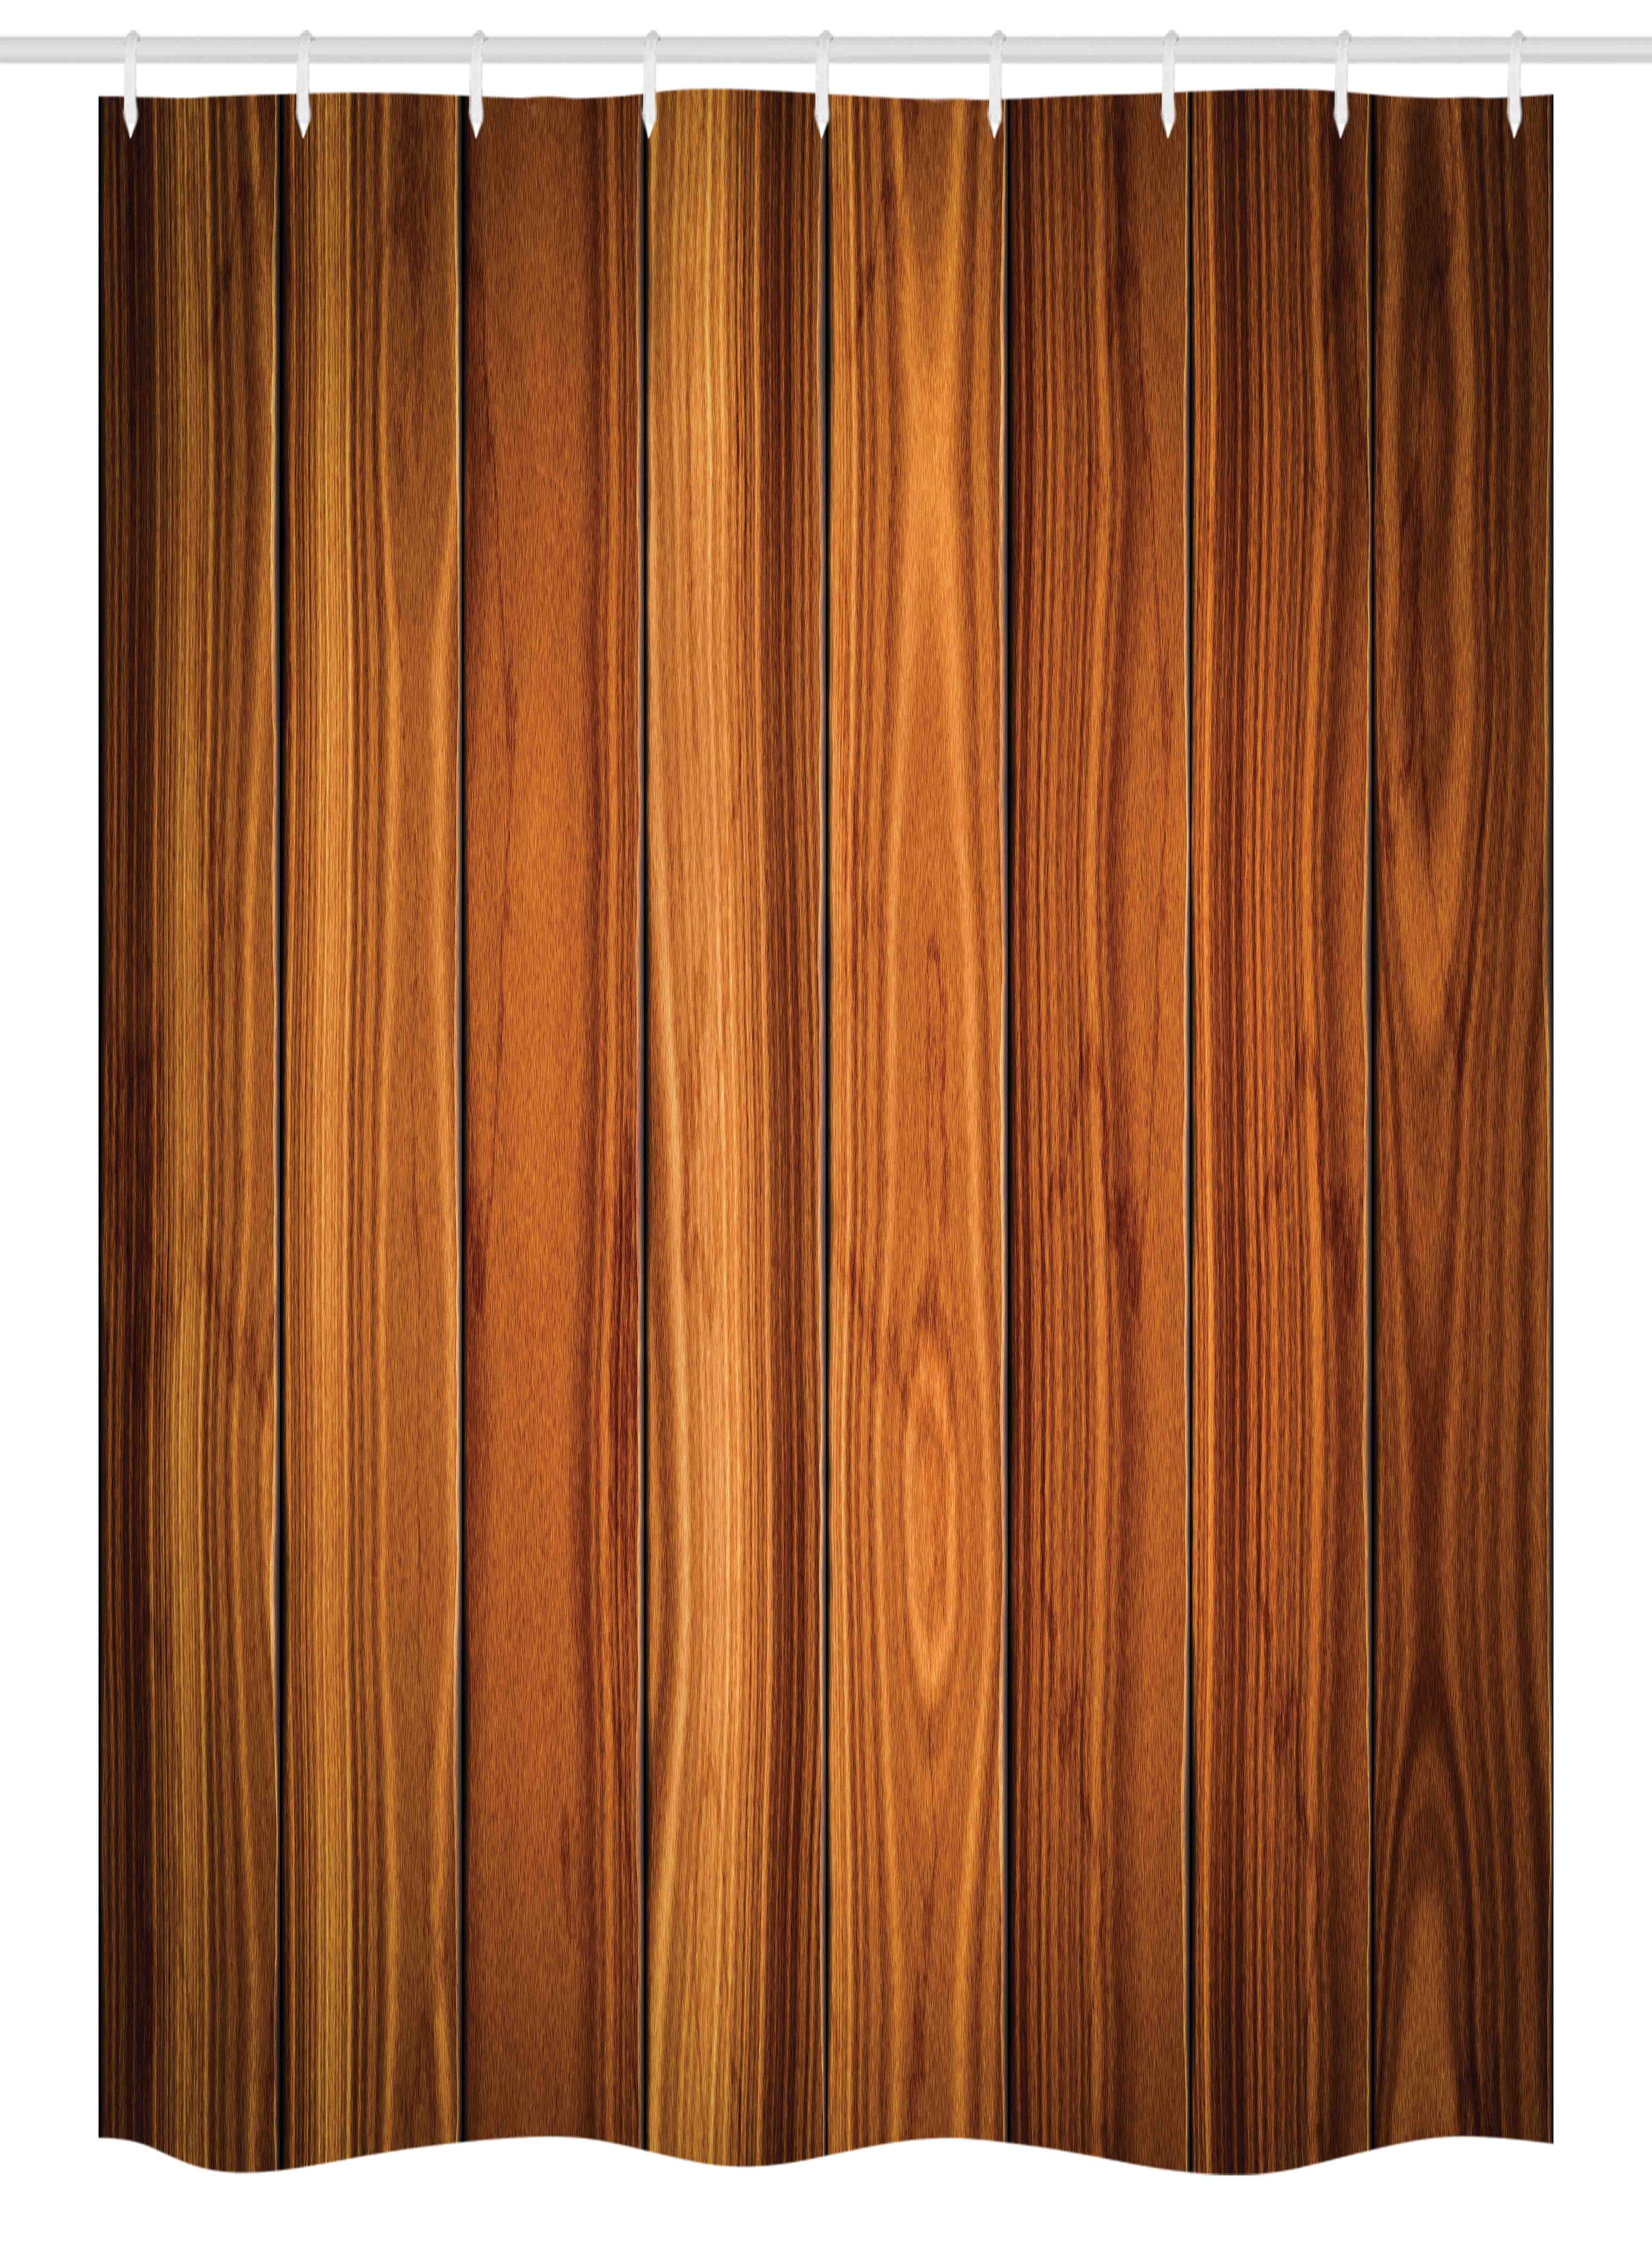 Rustic Stall Shower Curtain Digital Wood Panels Print for Bathroom 54"x78" 